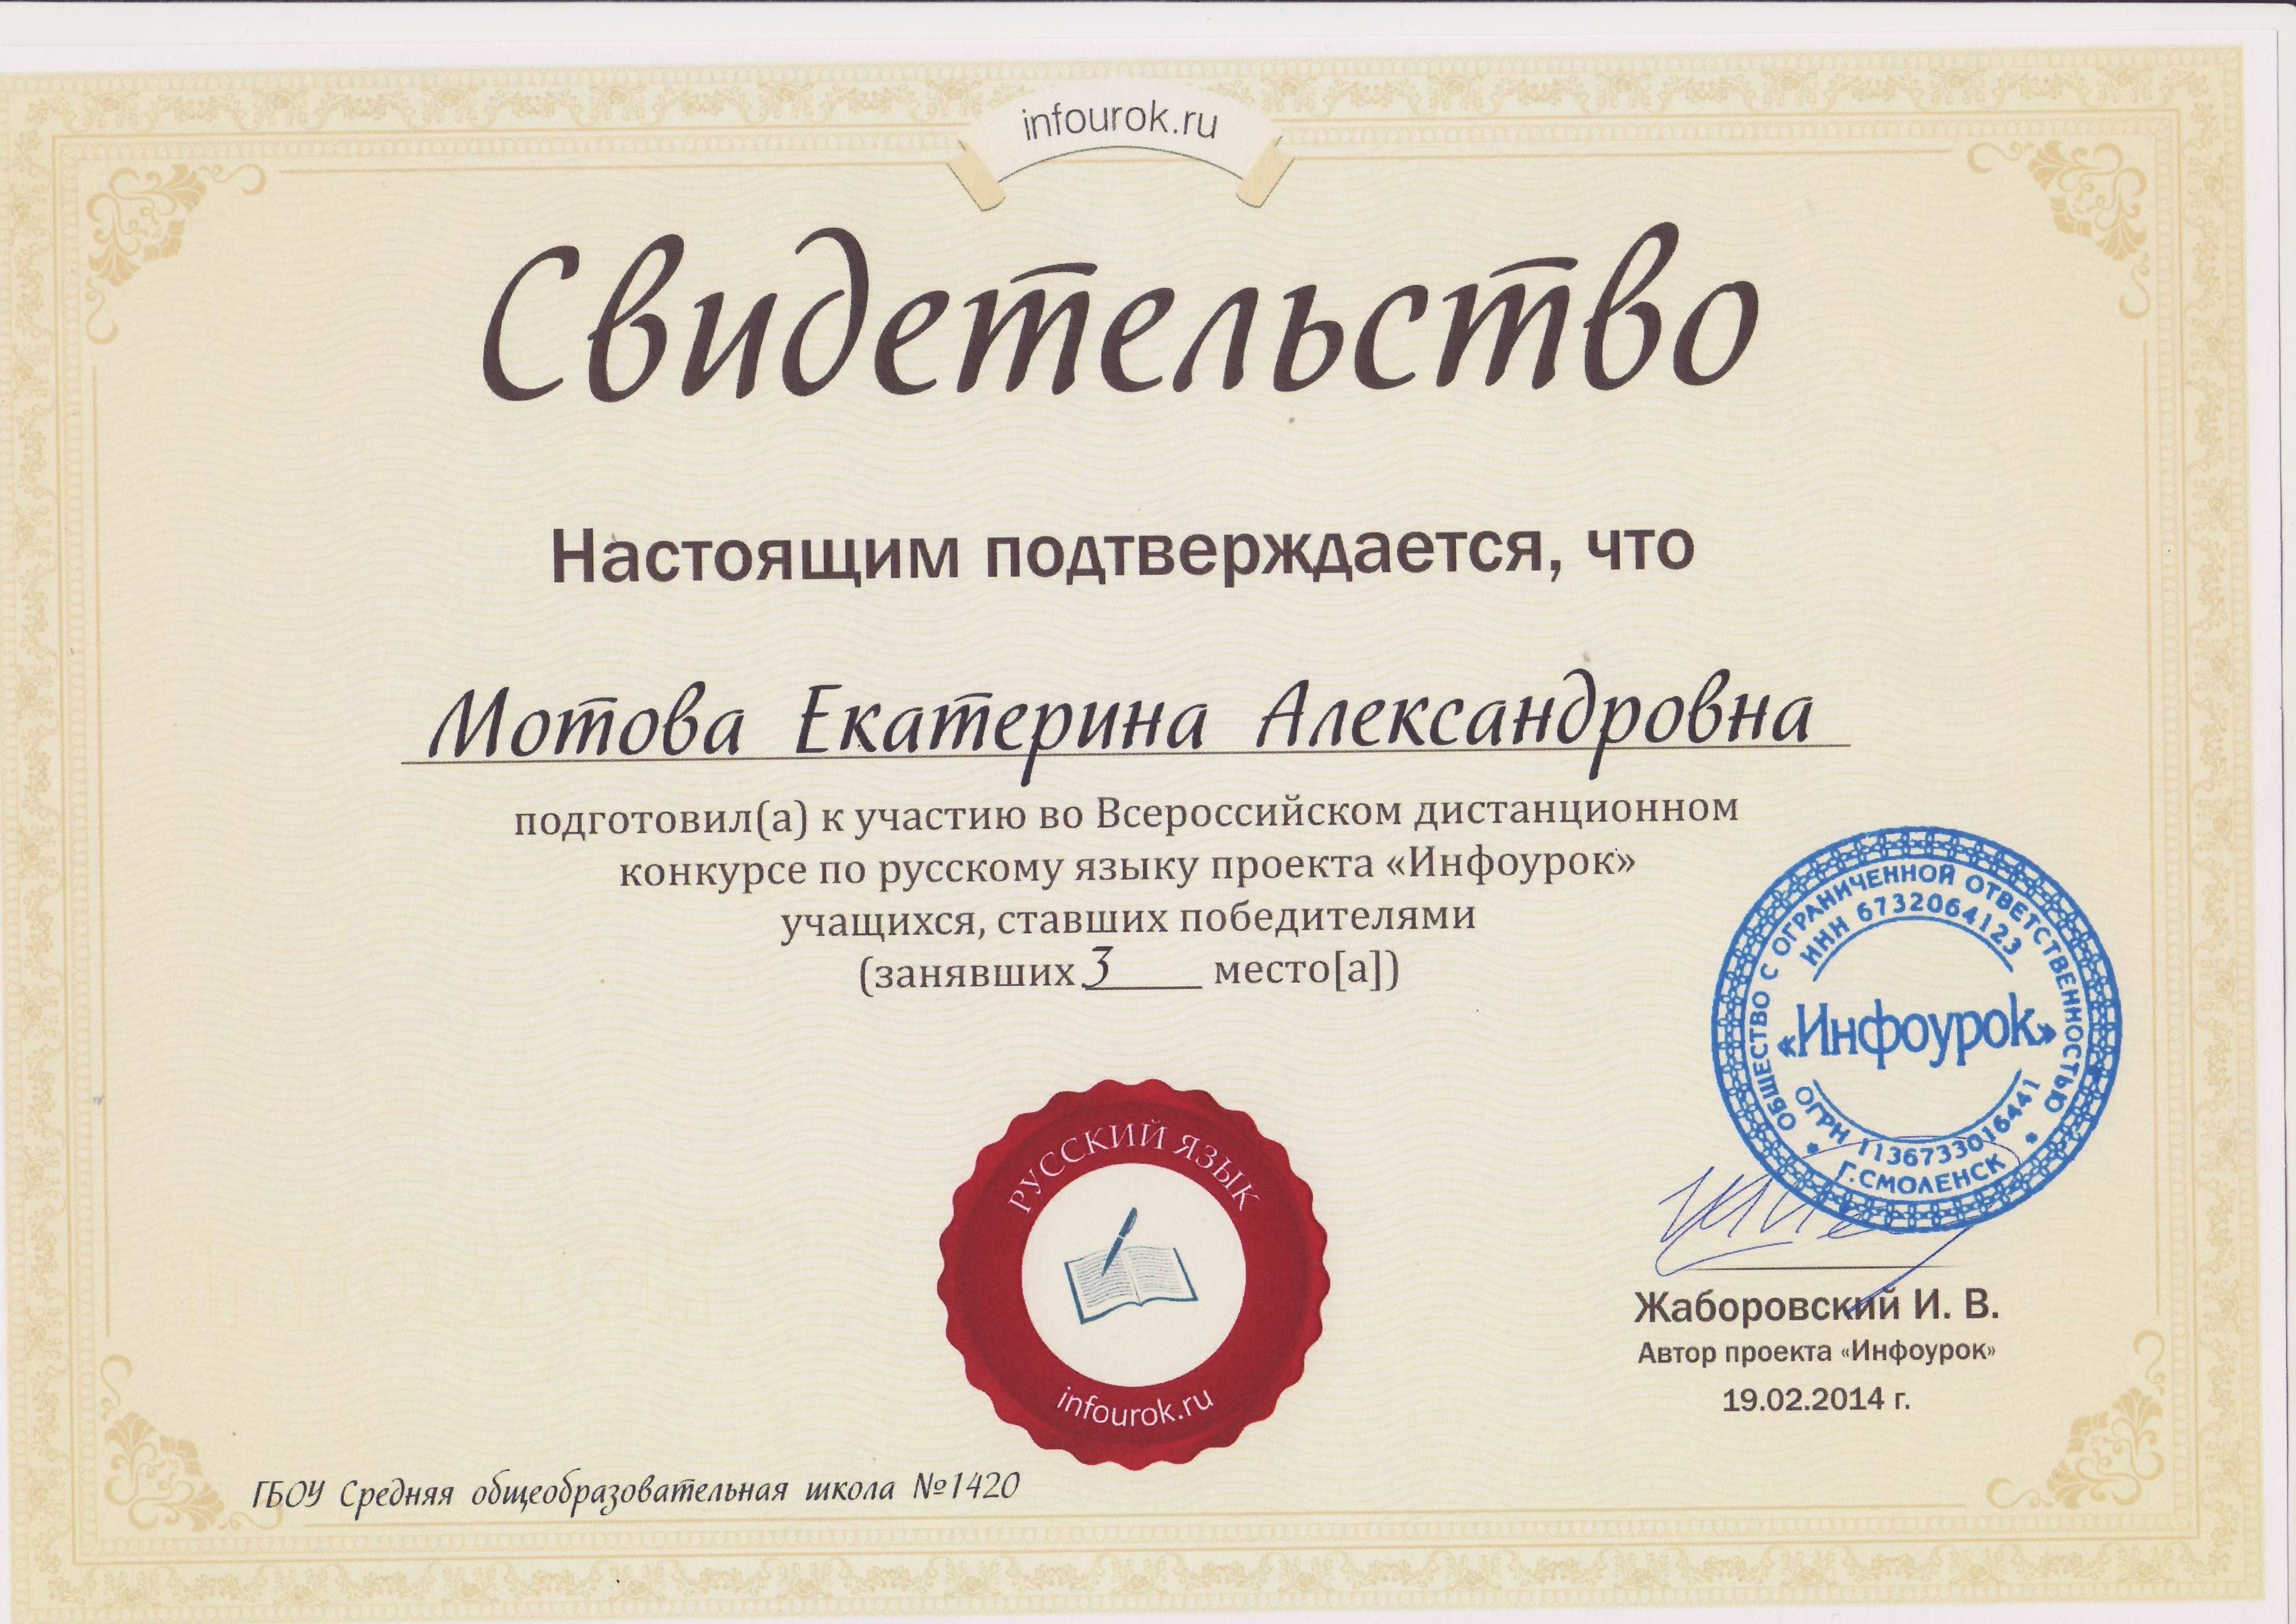 Infourok ru тесты. Свидетельство Инфоурок. Сертификат Инфоурок. Сертификат о публикации учителя информатики. Инфоурок дипломы сертификаты.